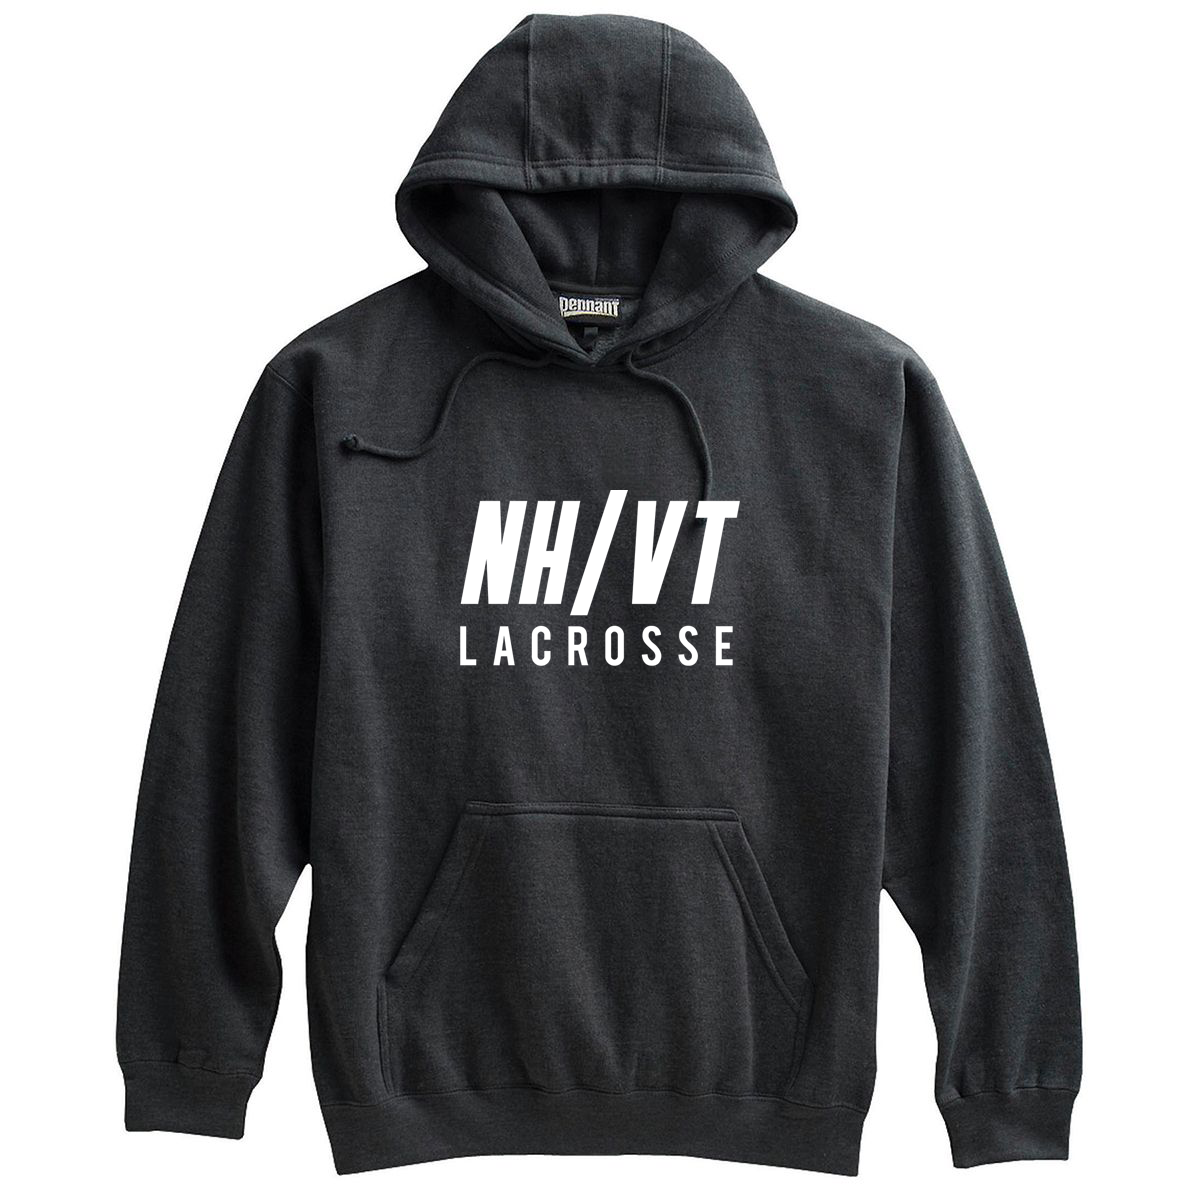 NH/VT Lacrosse Sweatshirt